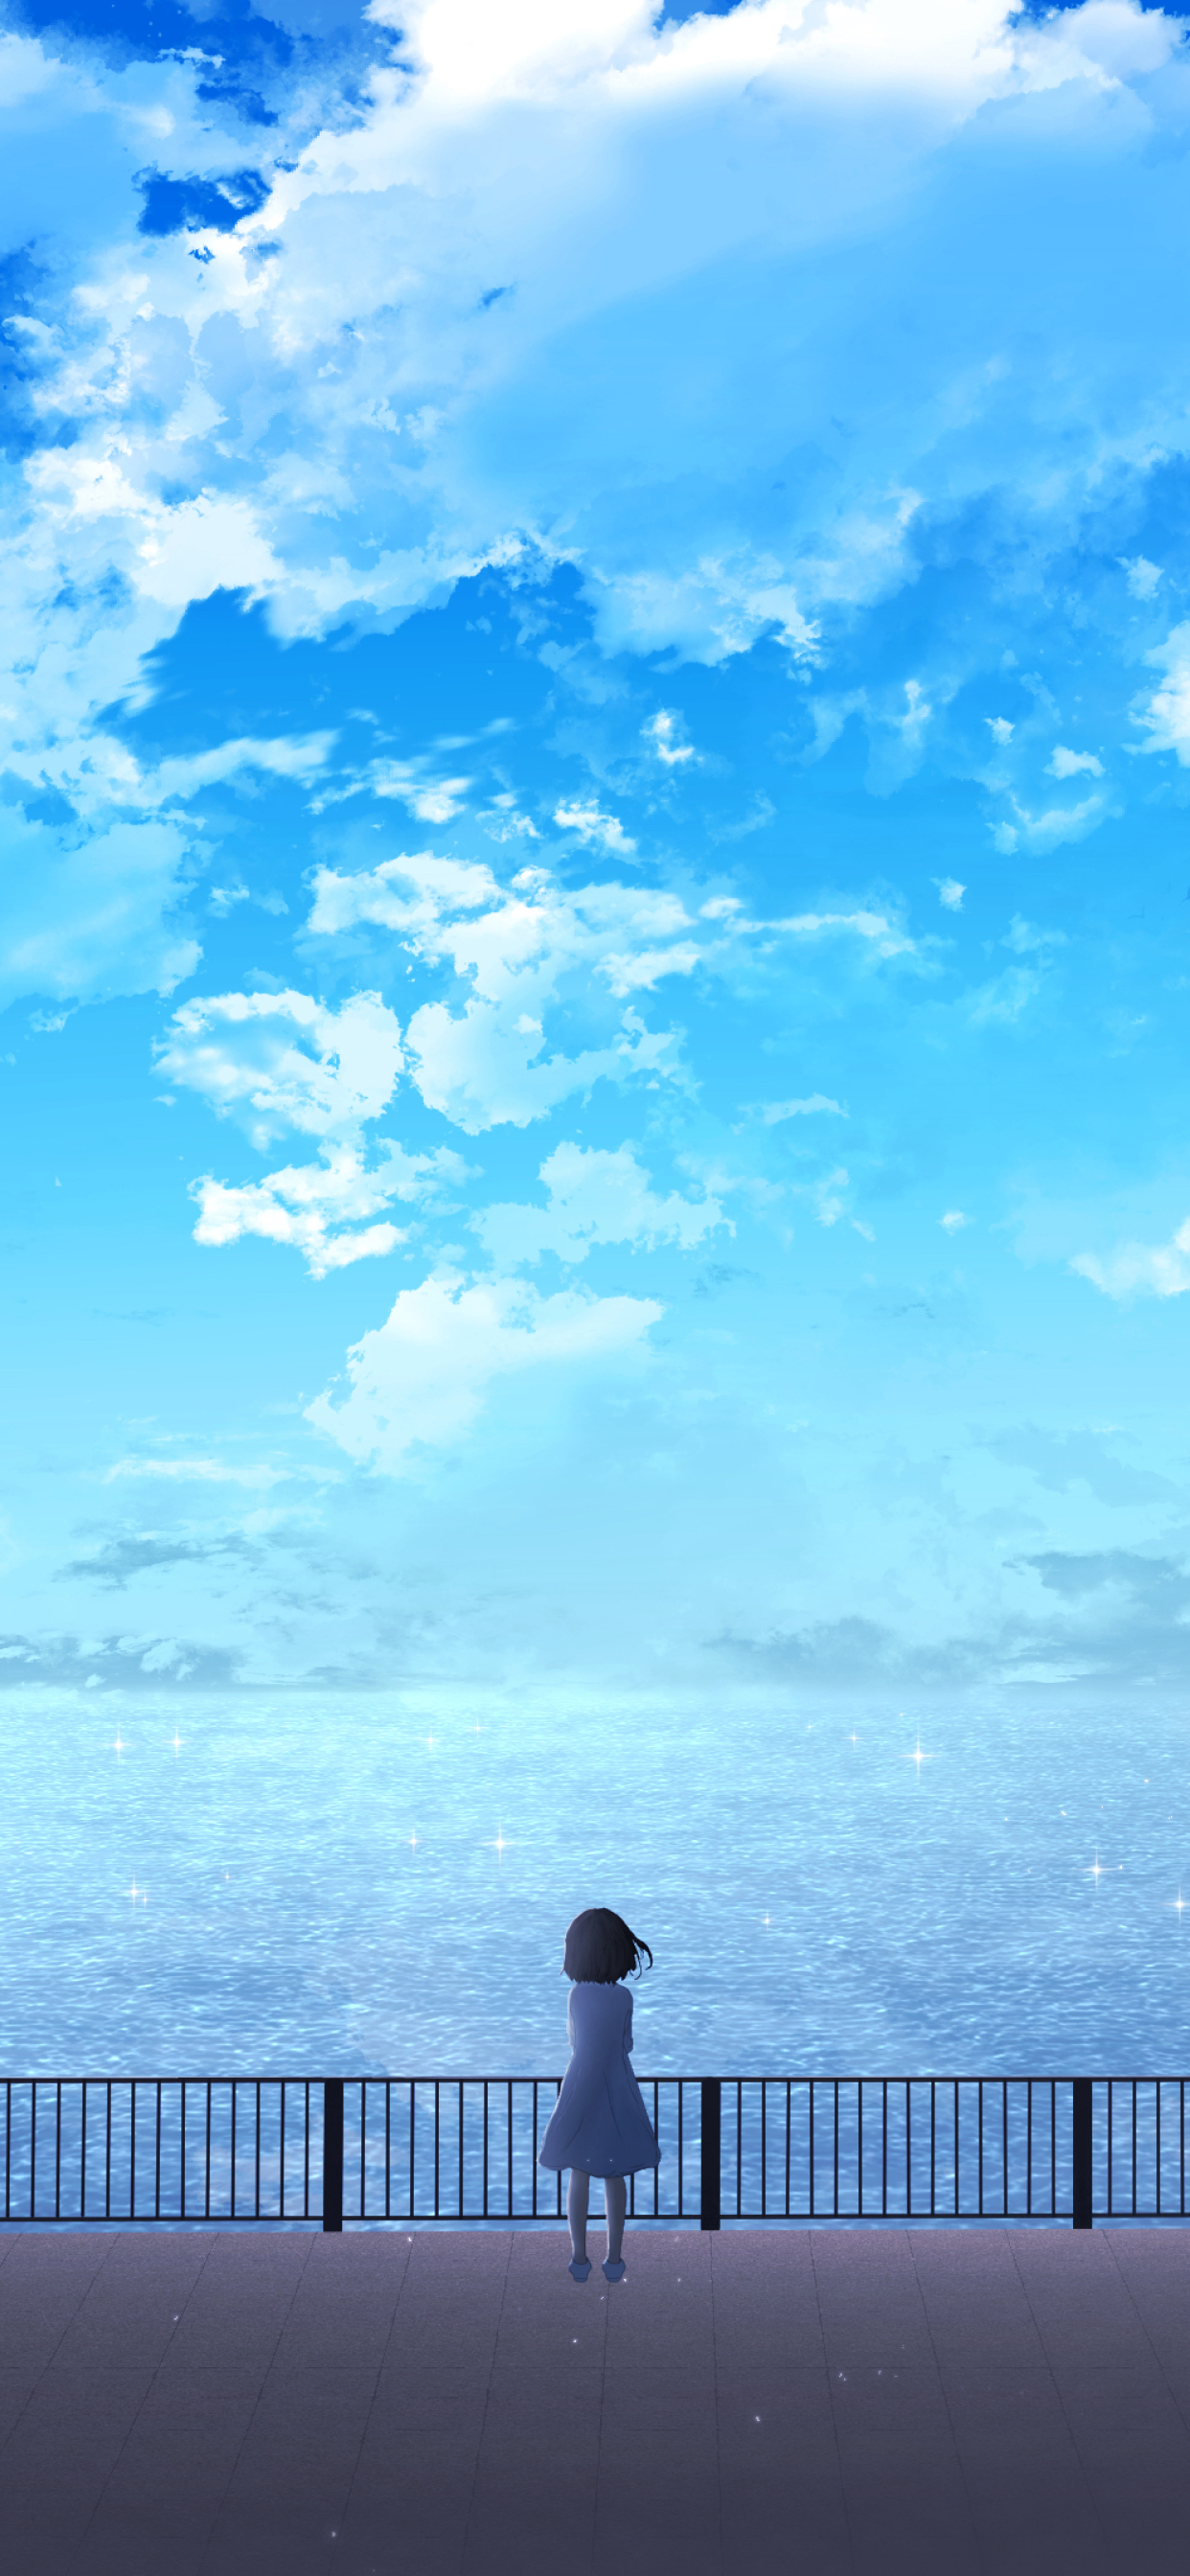 Tropical island in the sea. Anime wallpaper. AI Stock Illustration | Adobe  Stock